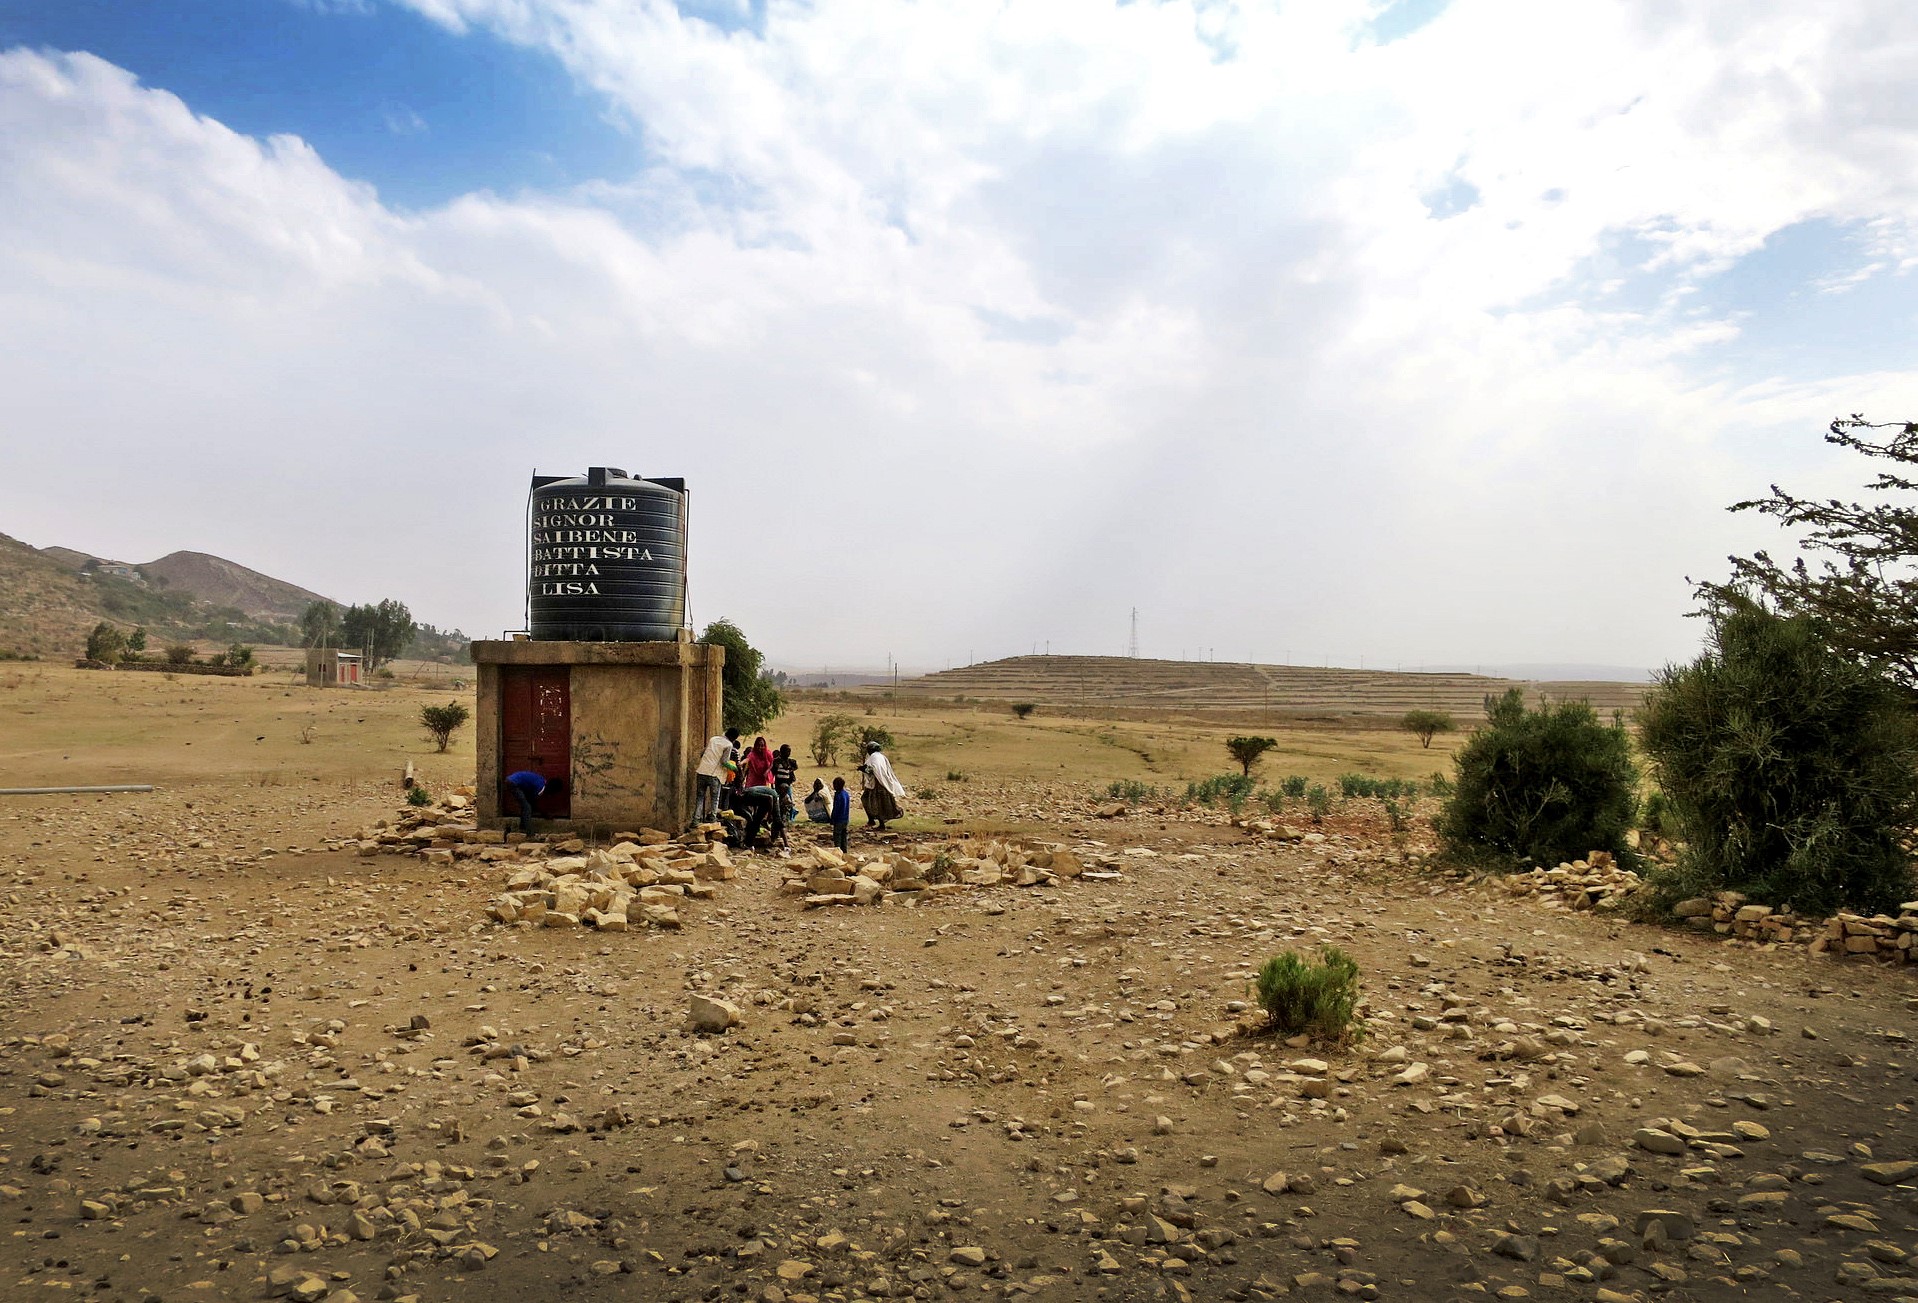 Water Collection Wukro Ethiopia; Credit: Katrina Charles/REACH